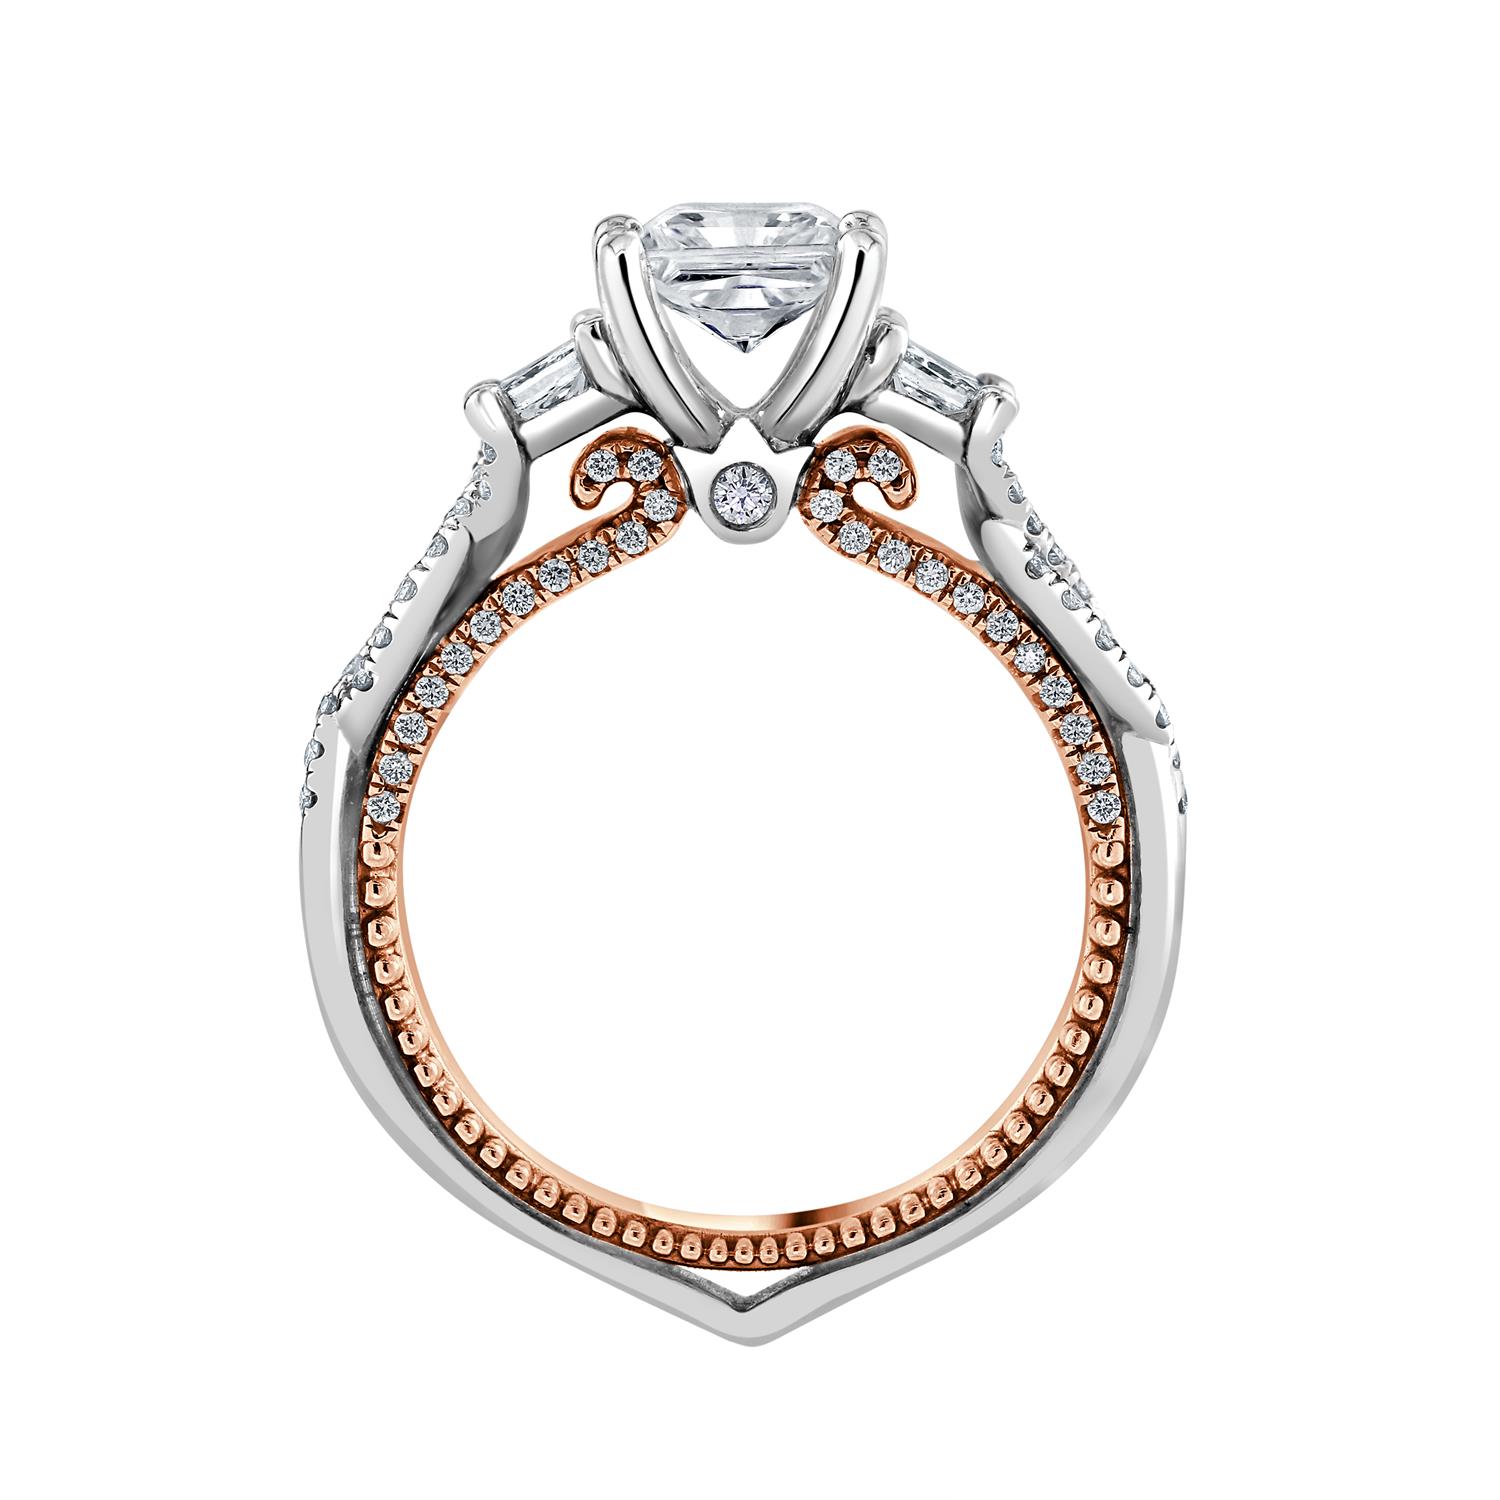 Emerald Lady Jewelry - Verragio Parisian 136R Engagement Ring in Rose Gold  ❤️❤️❤️ Yes, Please! #Verragio #coutureengagementrings #engaged  #gettingmarried #hey30a #verragioengagementrings #engagementrings #theknot  #weddingsets #destinwedding ...